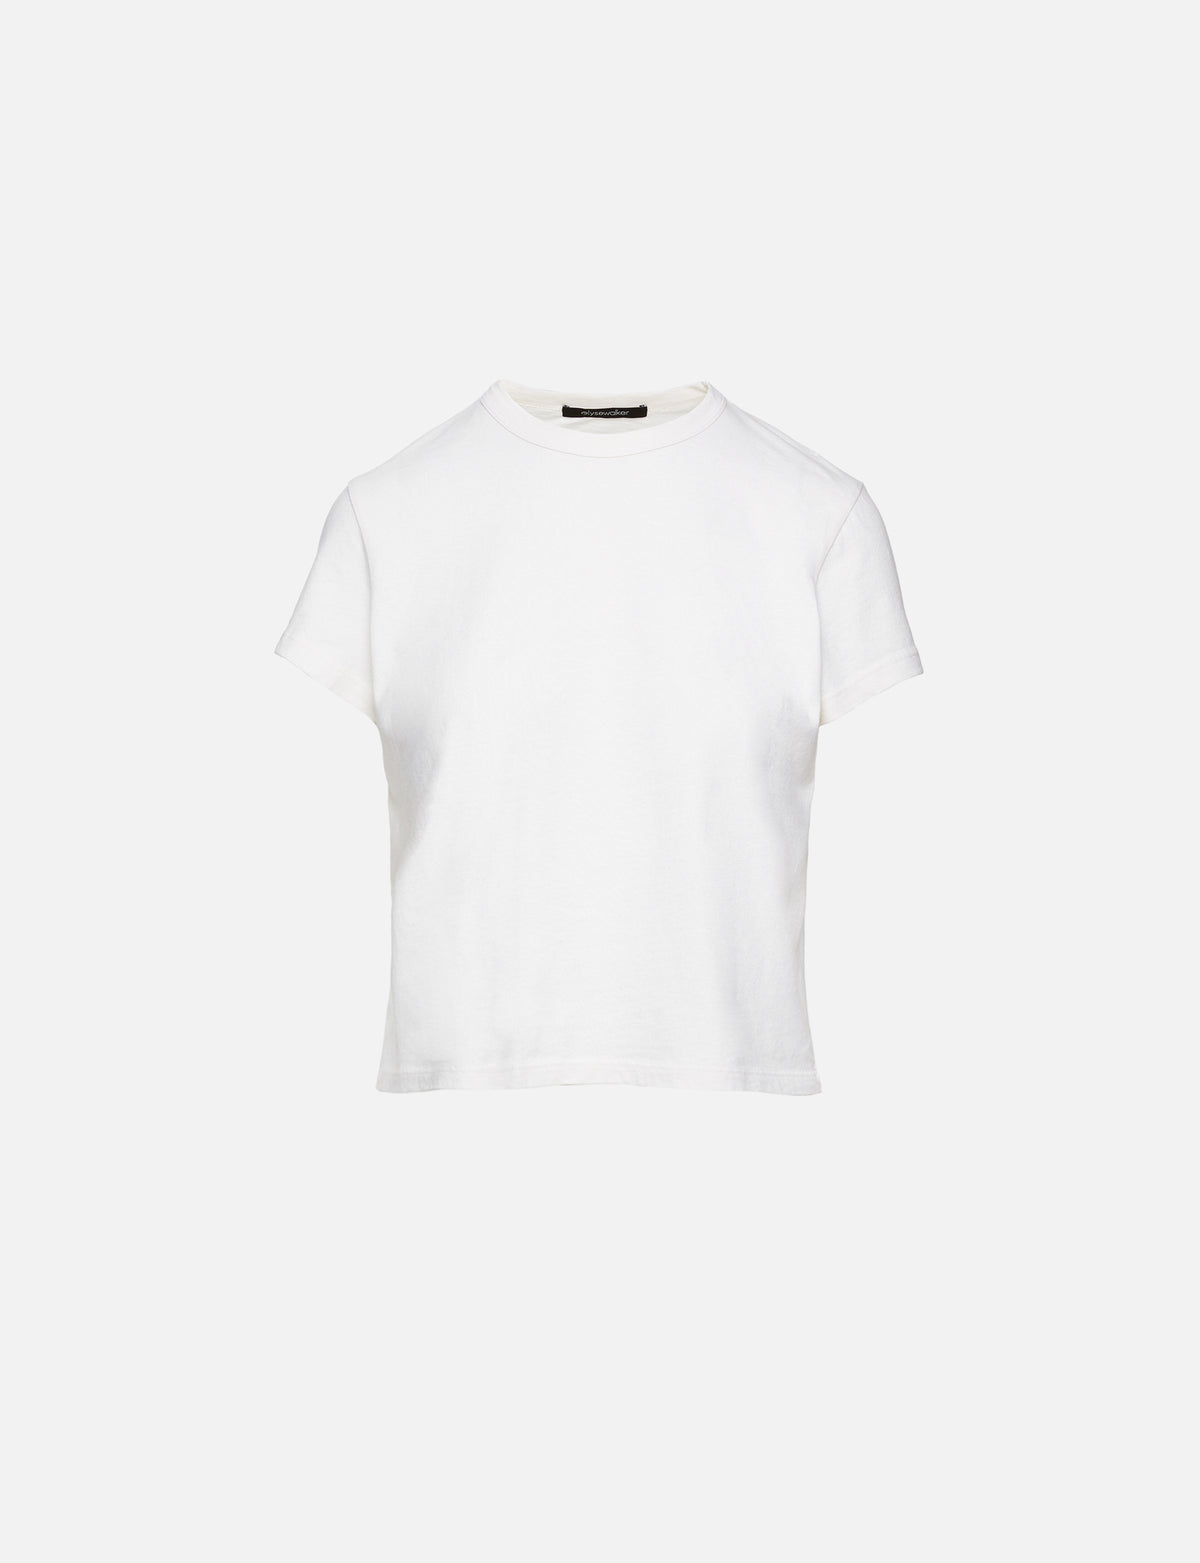 Plain White Cotton Ladies Shirt, Size: Medium, Casual at Rs 200